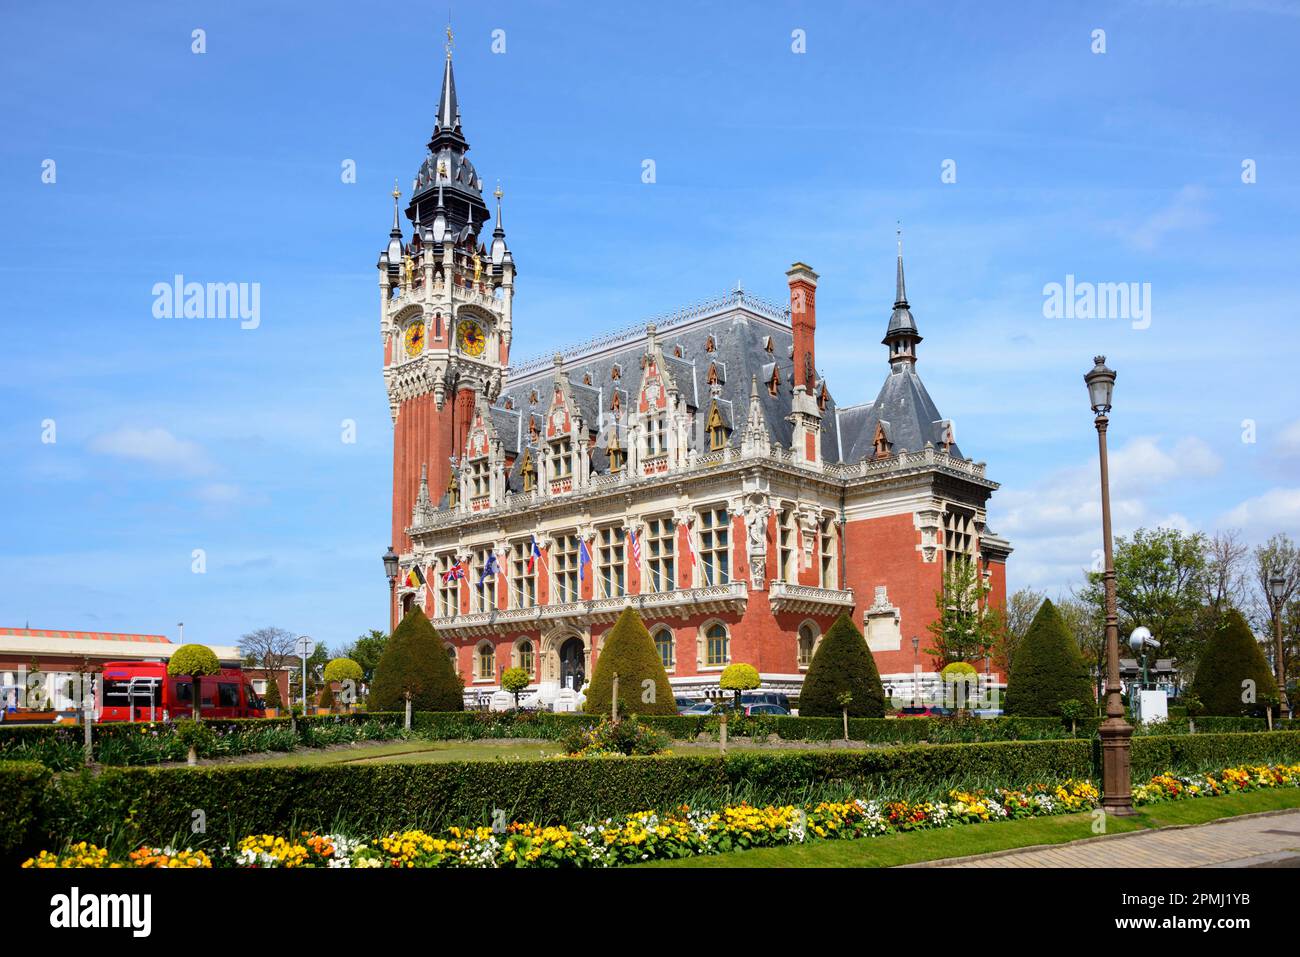 Town Hall, Calais, France, Hotel de ville Stock Photo - Alamy